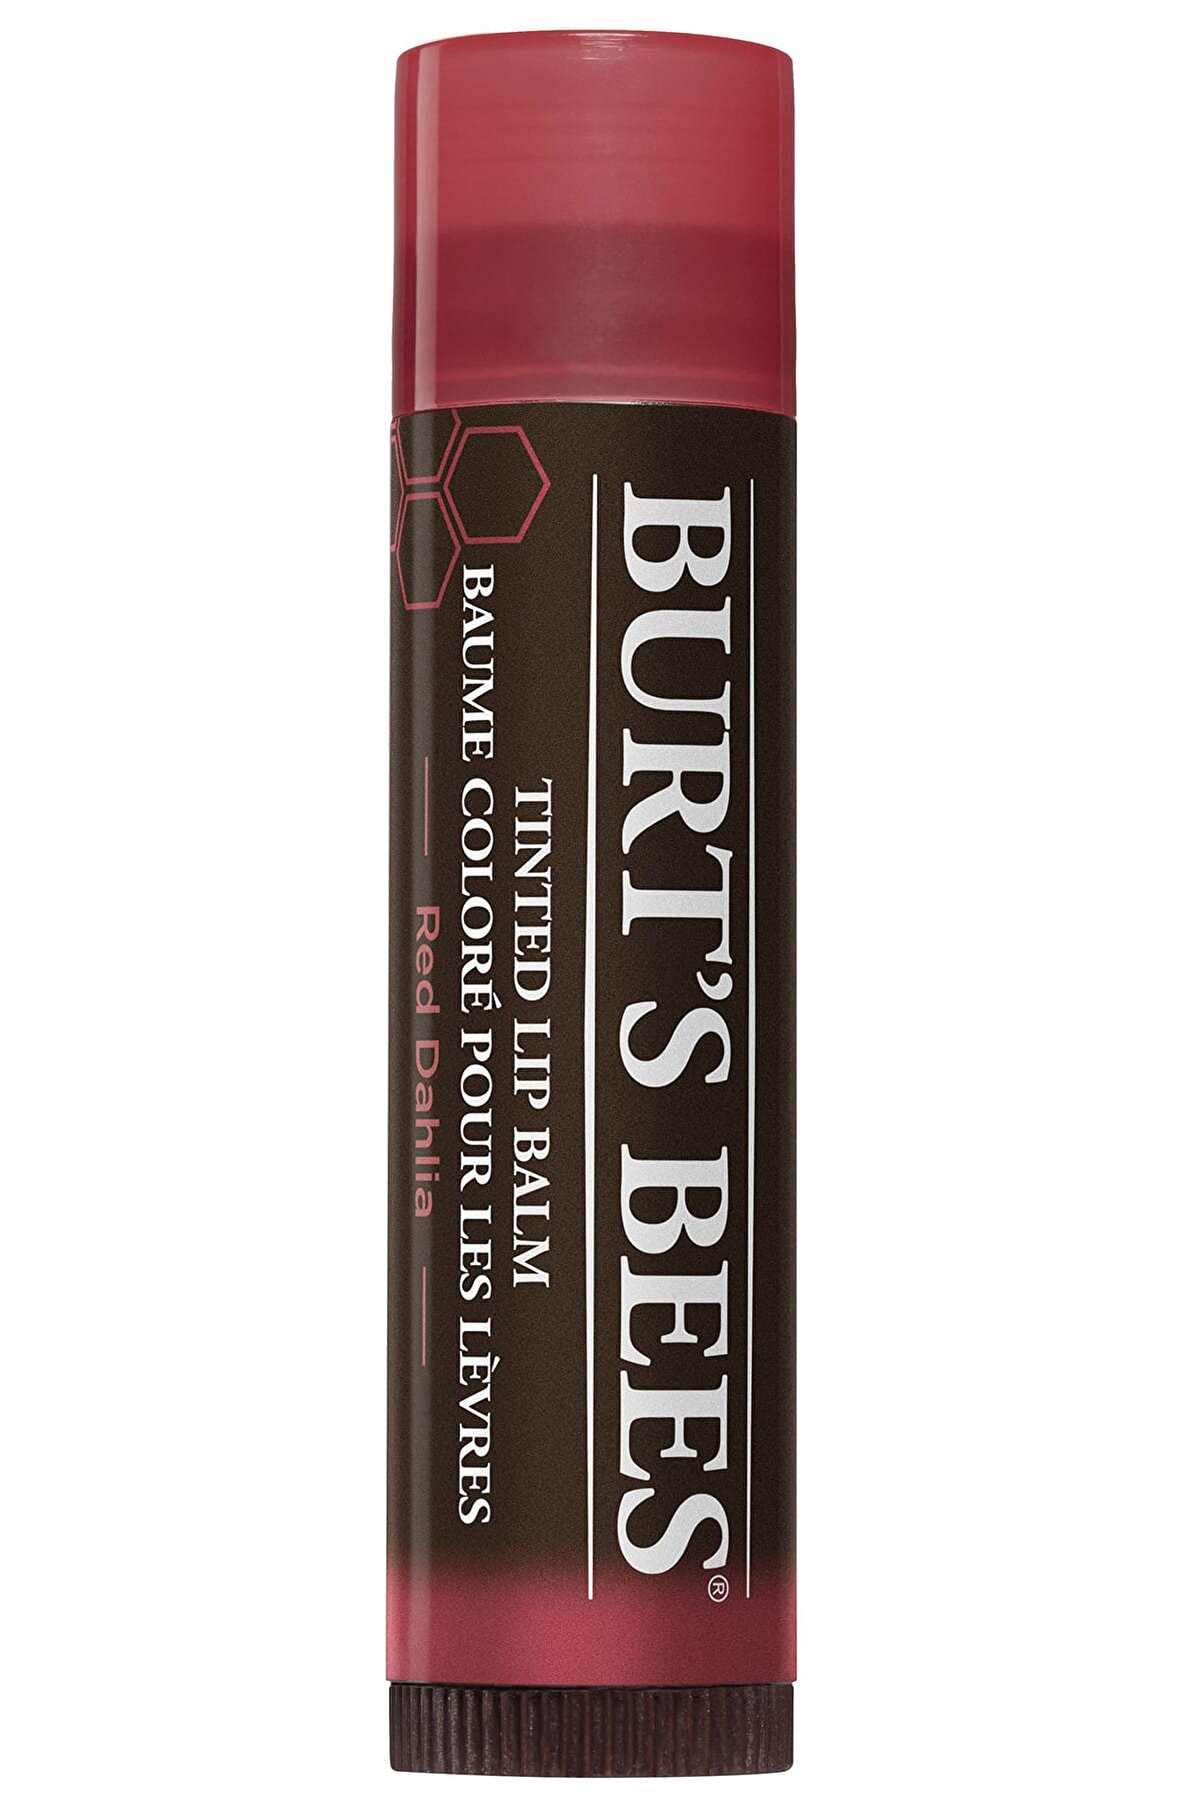 Burt's Bees Renkli Dudak Bakım Kremi Vişne - Tinted Lip Balm Red Dahlia 4,25 gr